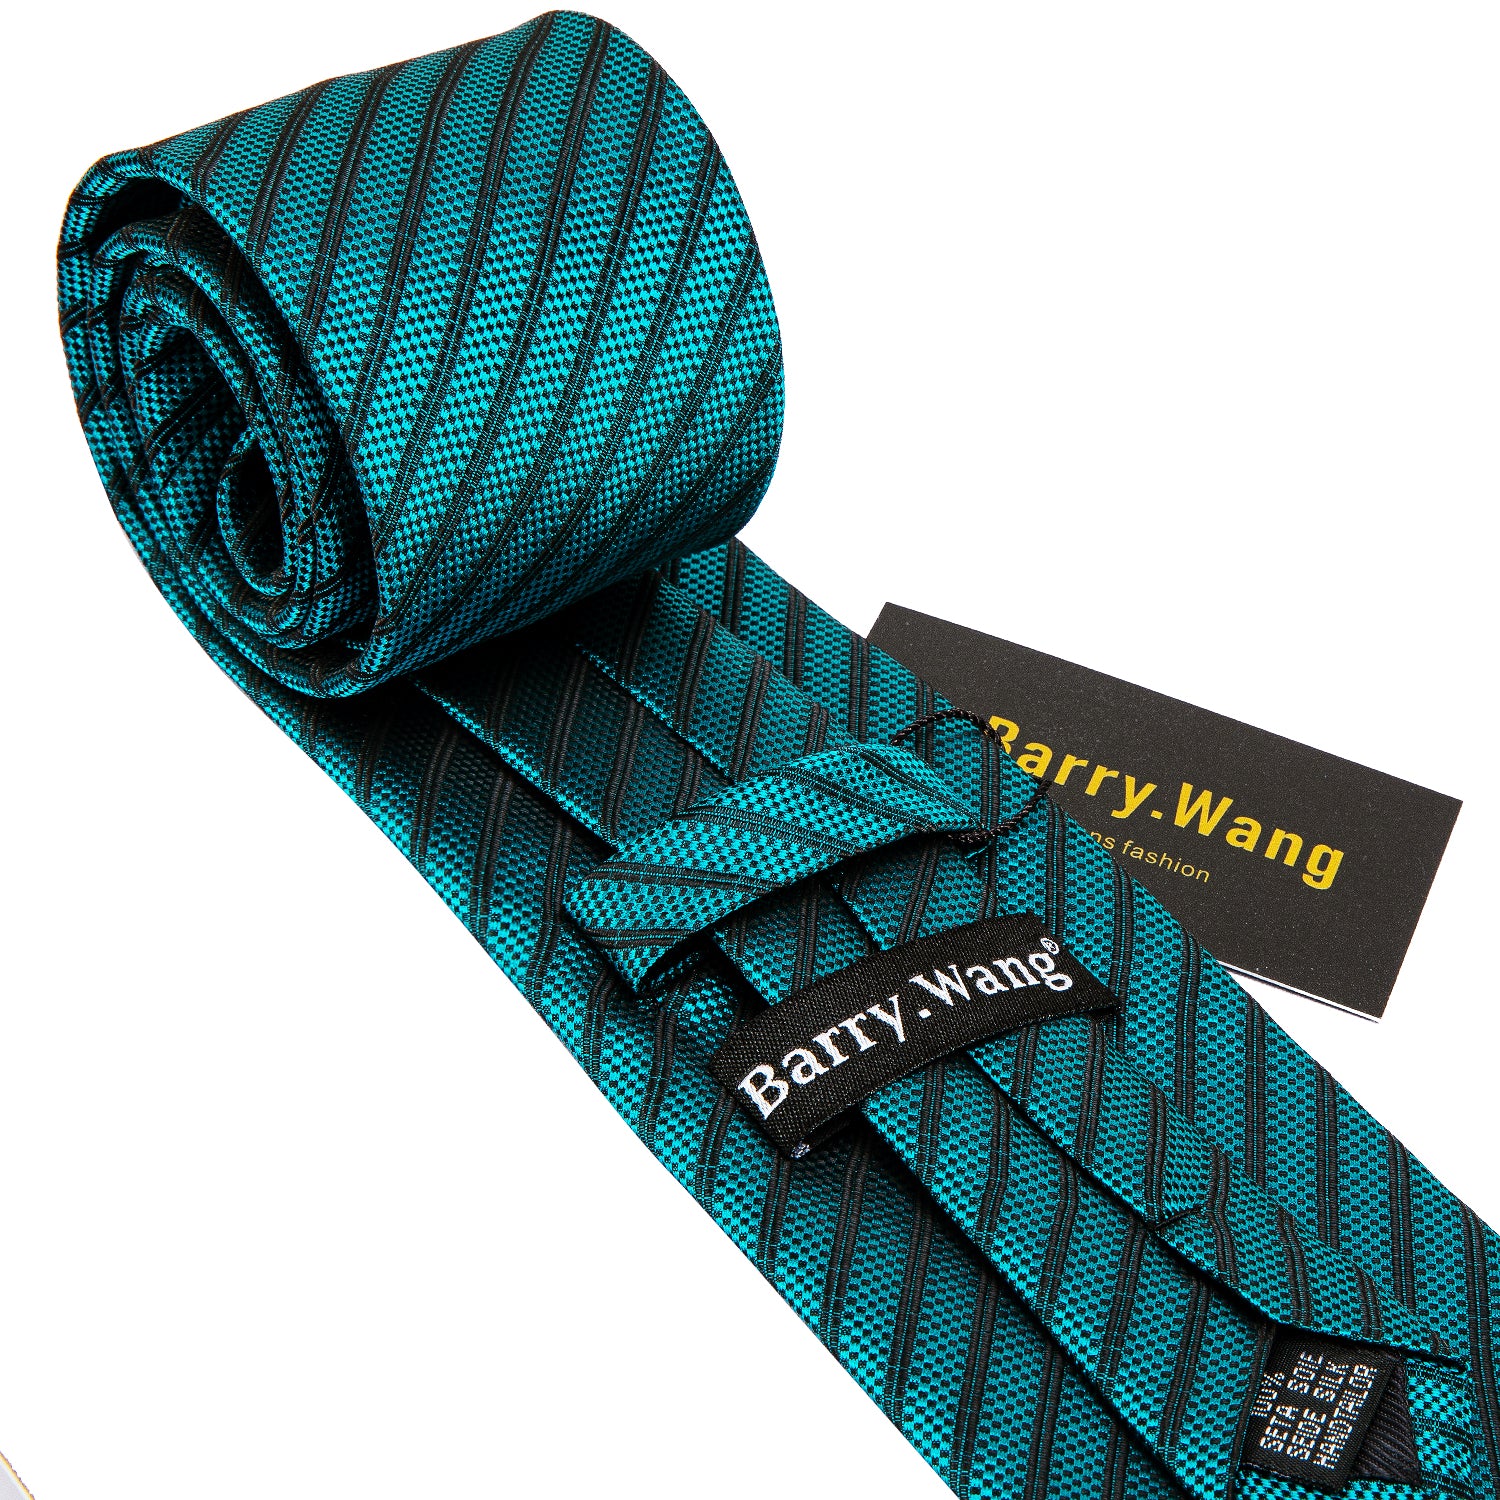 Teal Black Striped Tie Pocket Square Cufflinks Set